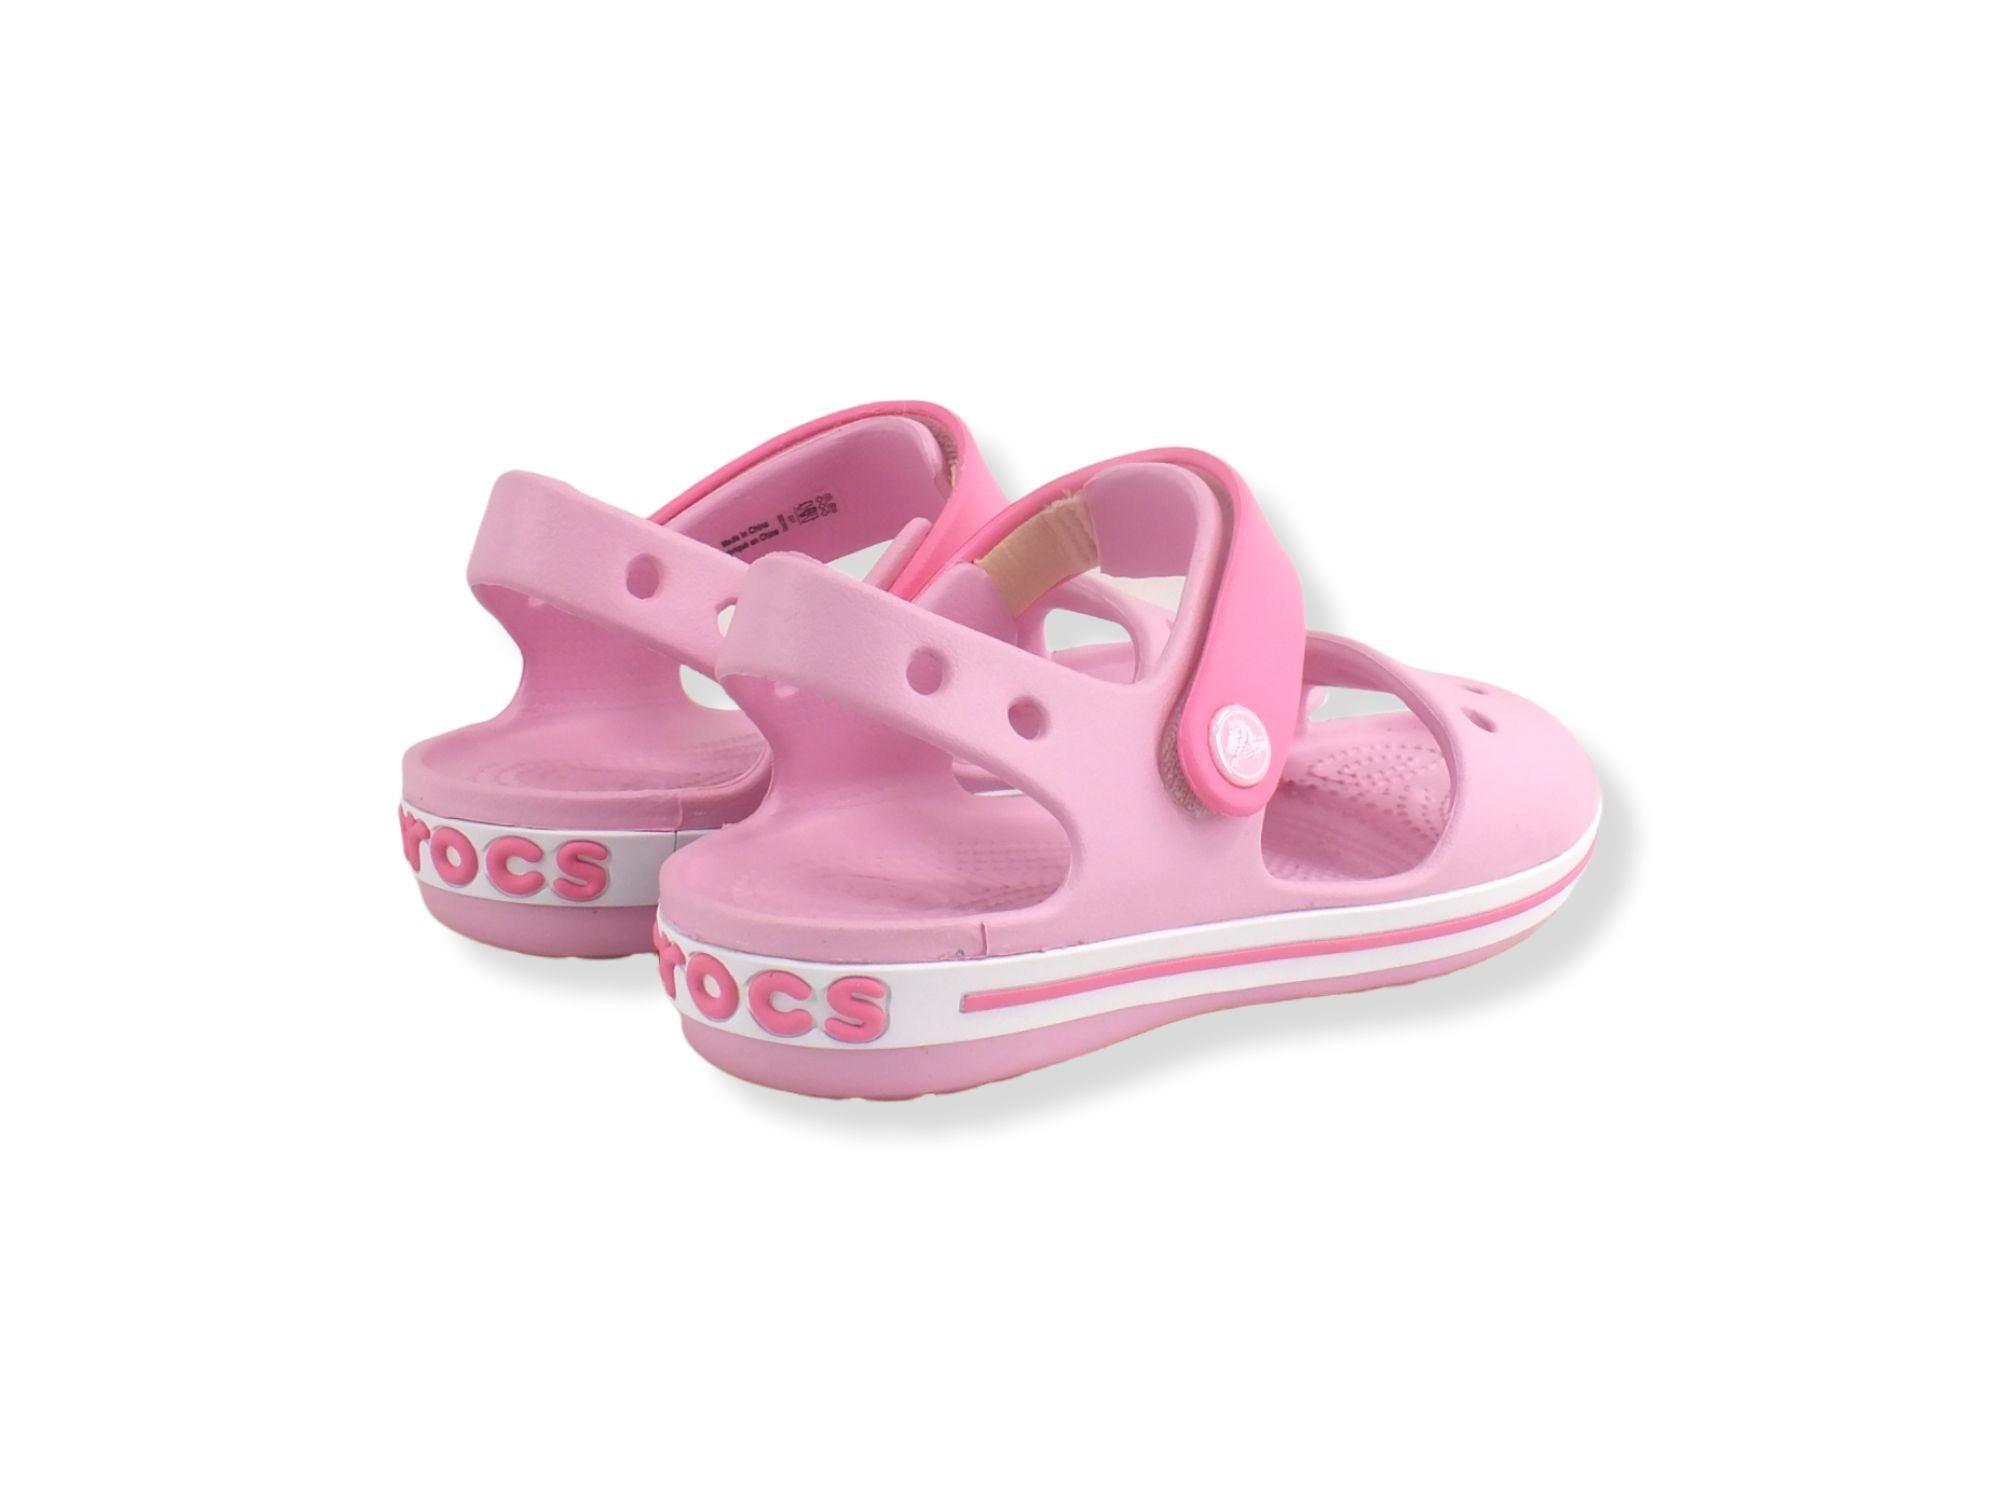 CROCS Crocband Sandal Bambino Rosa Ballerina Pink 12856-6GD - Sandrini Calzature e Abbigliamento